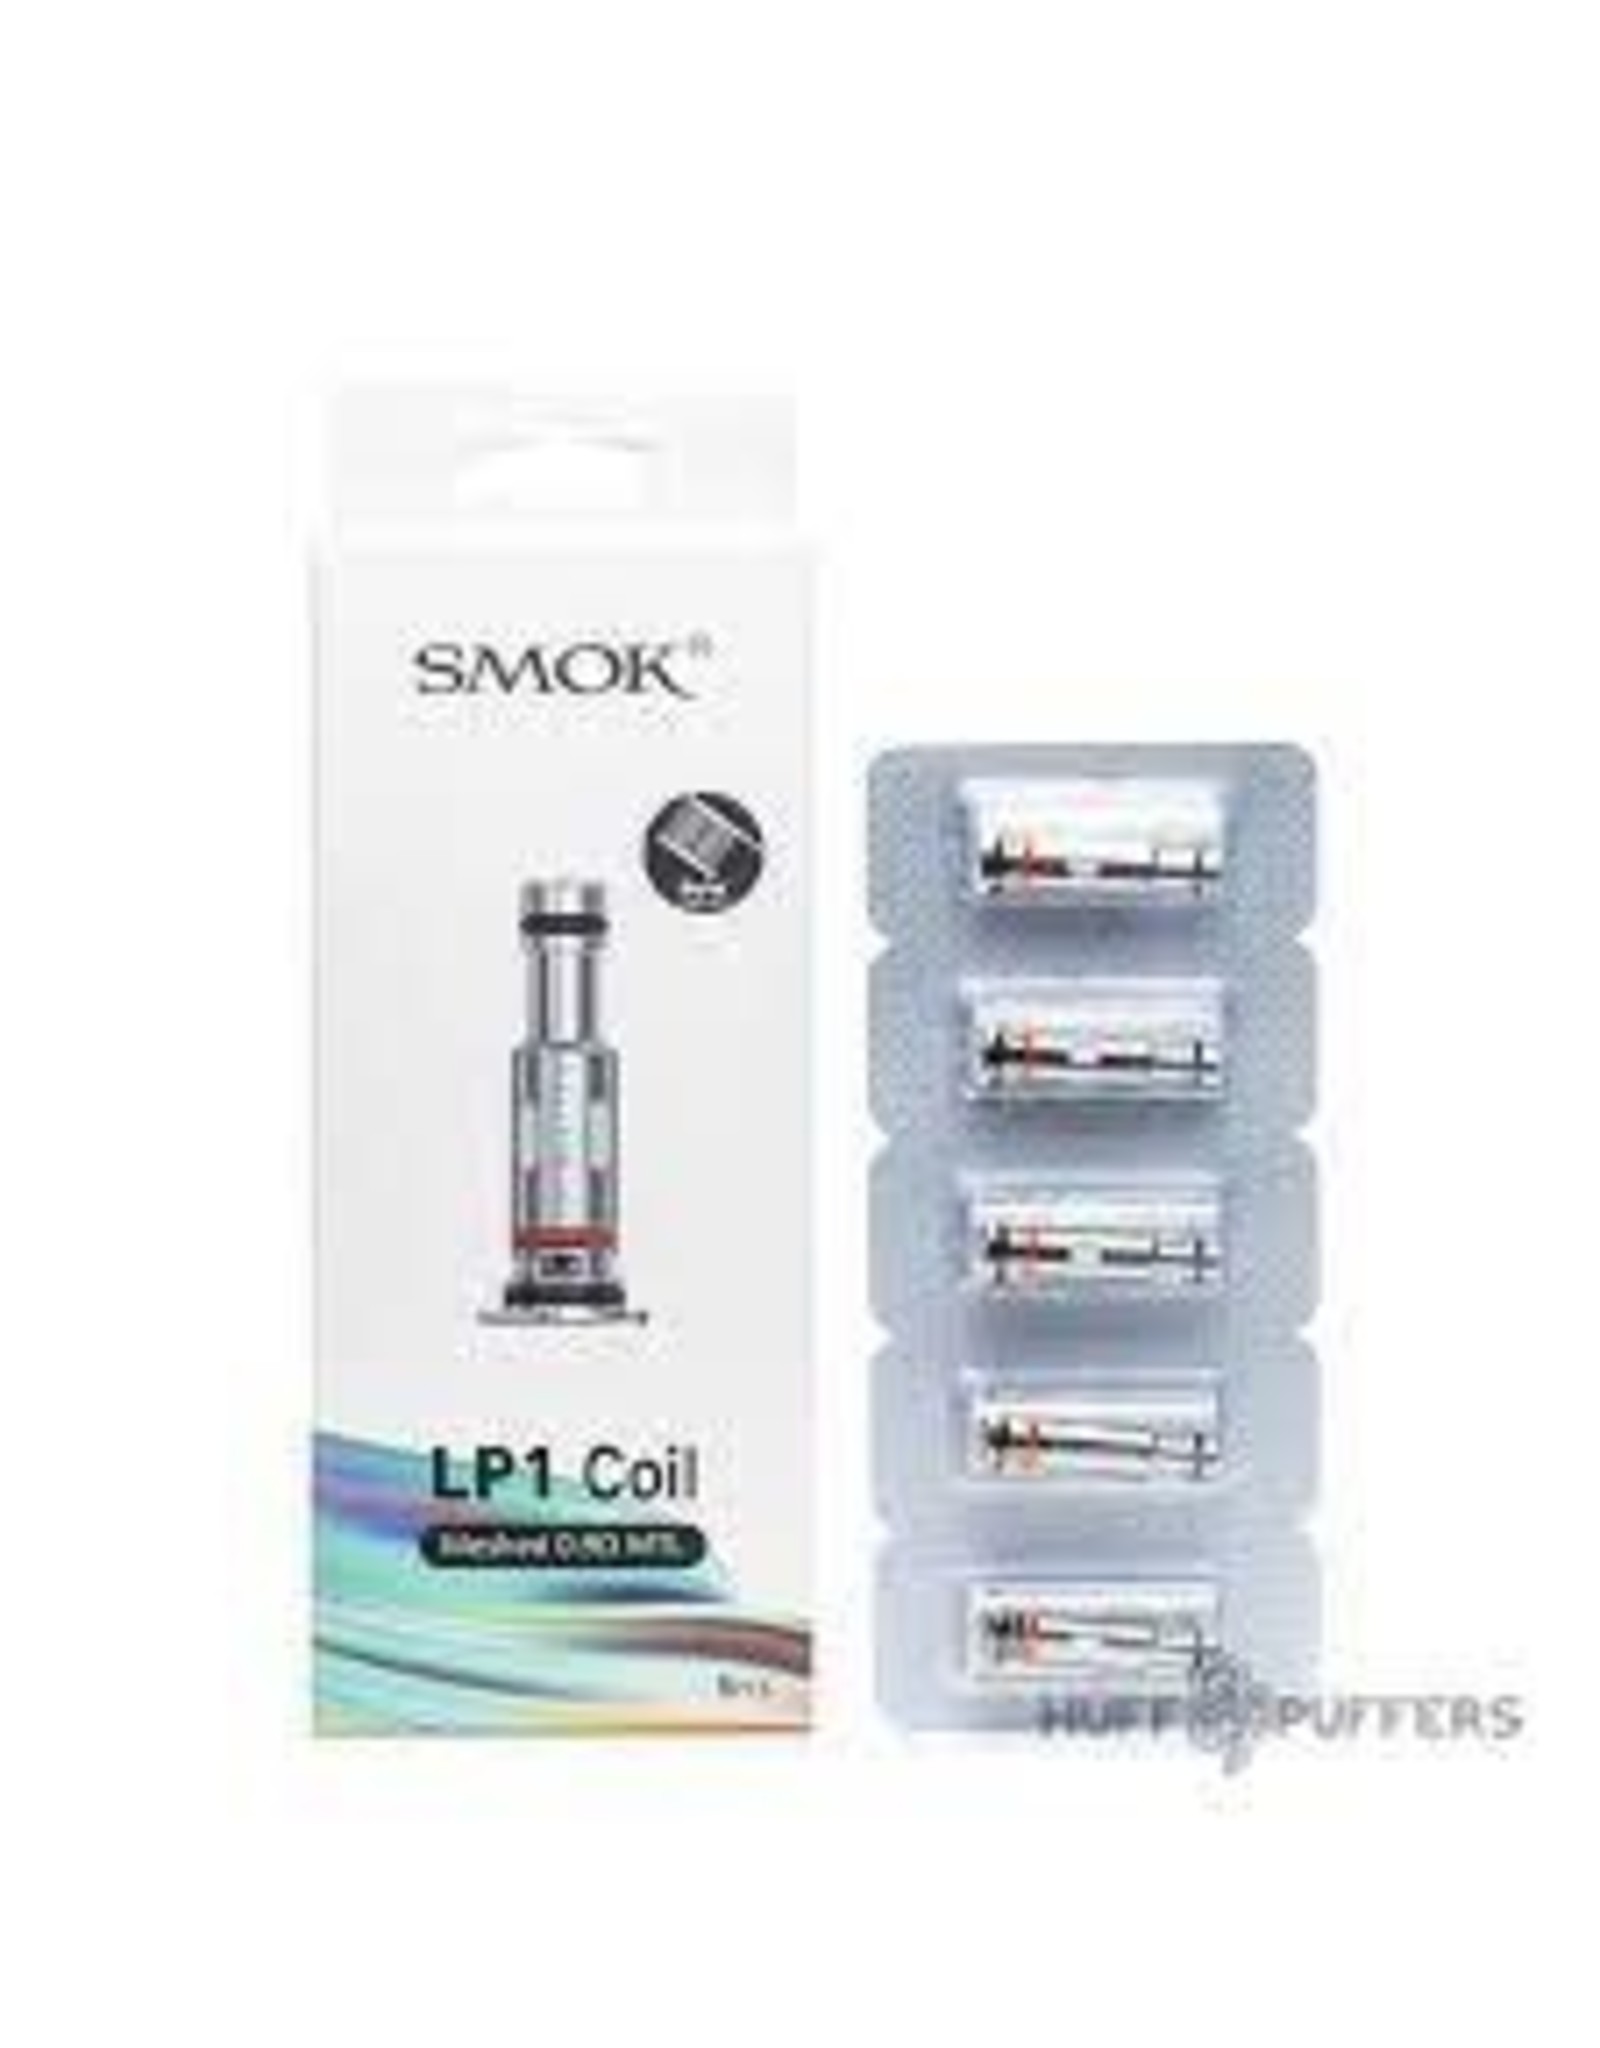 Smok Smok LP1 Coils MTL Meshed 0.9 Ω single